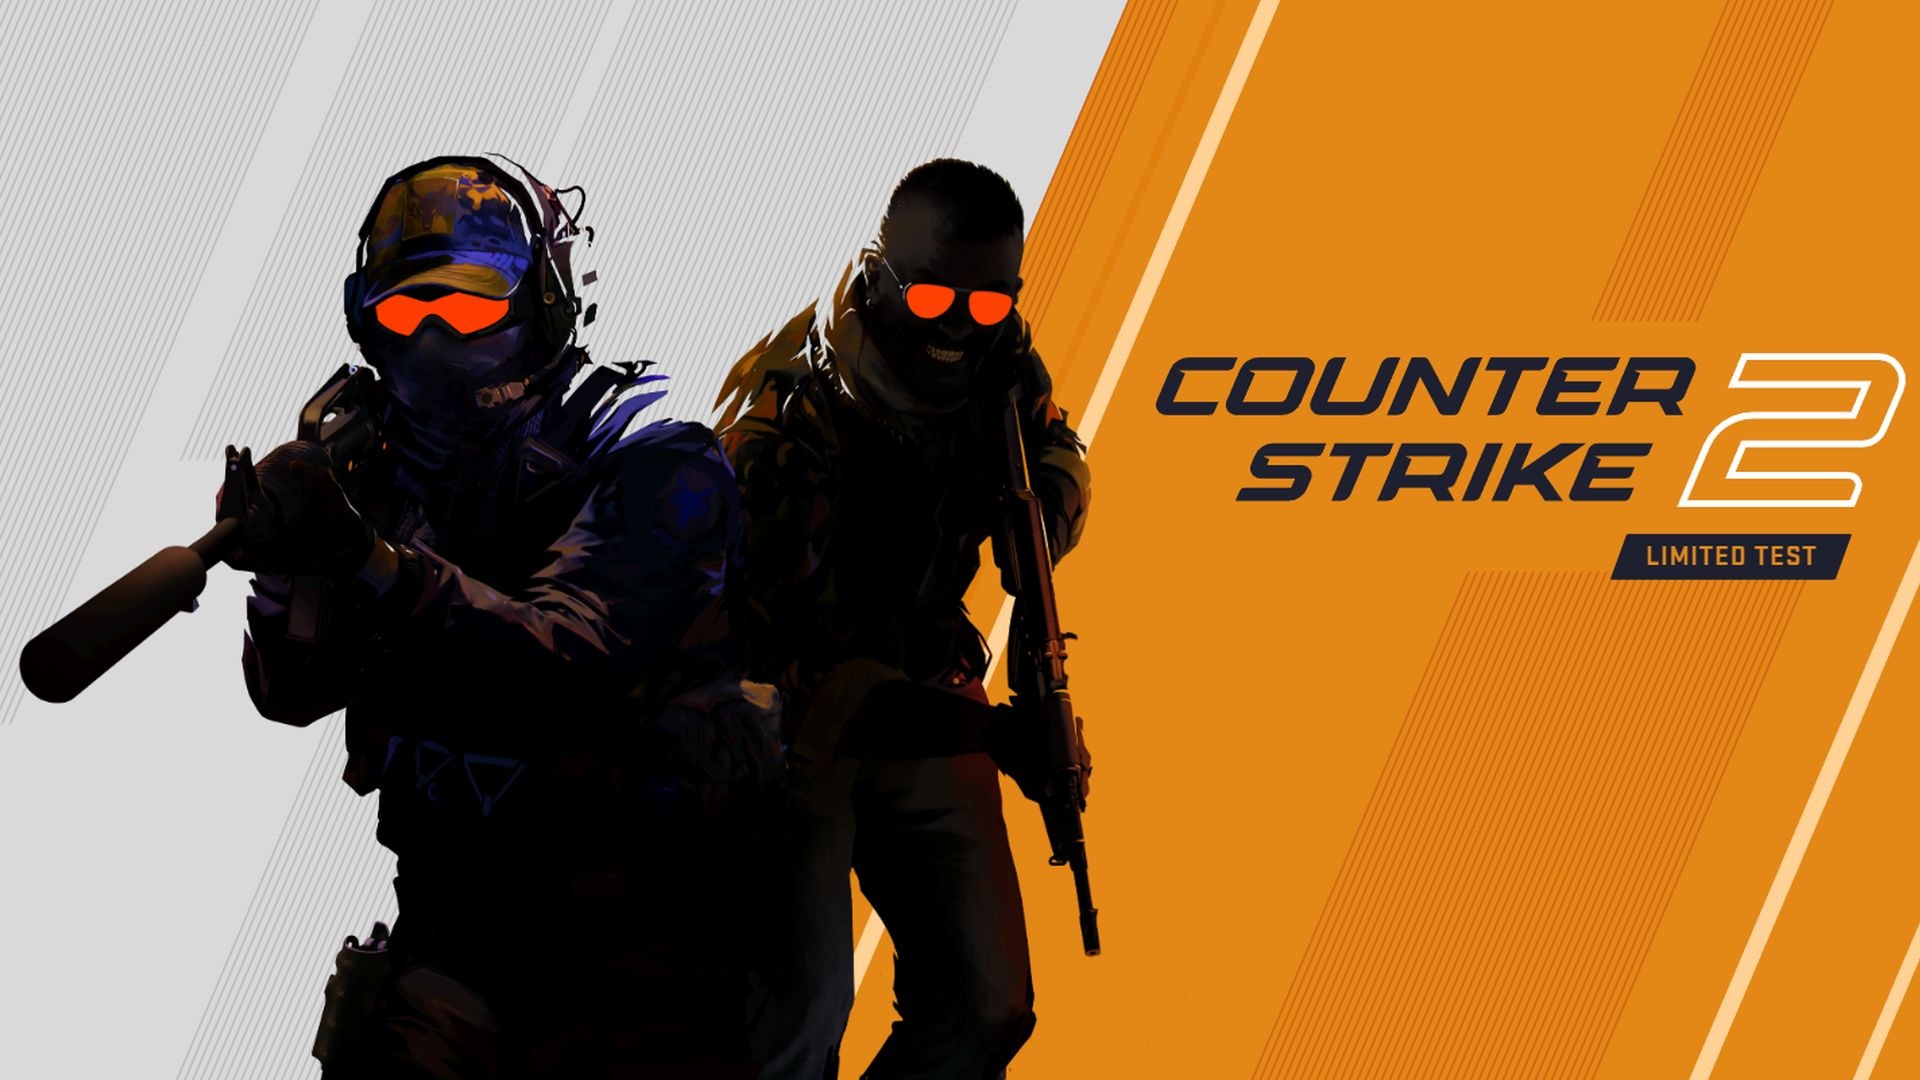 portada de Counter Strike 2 Limited Test